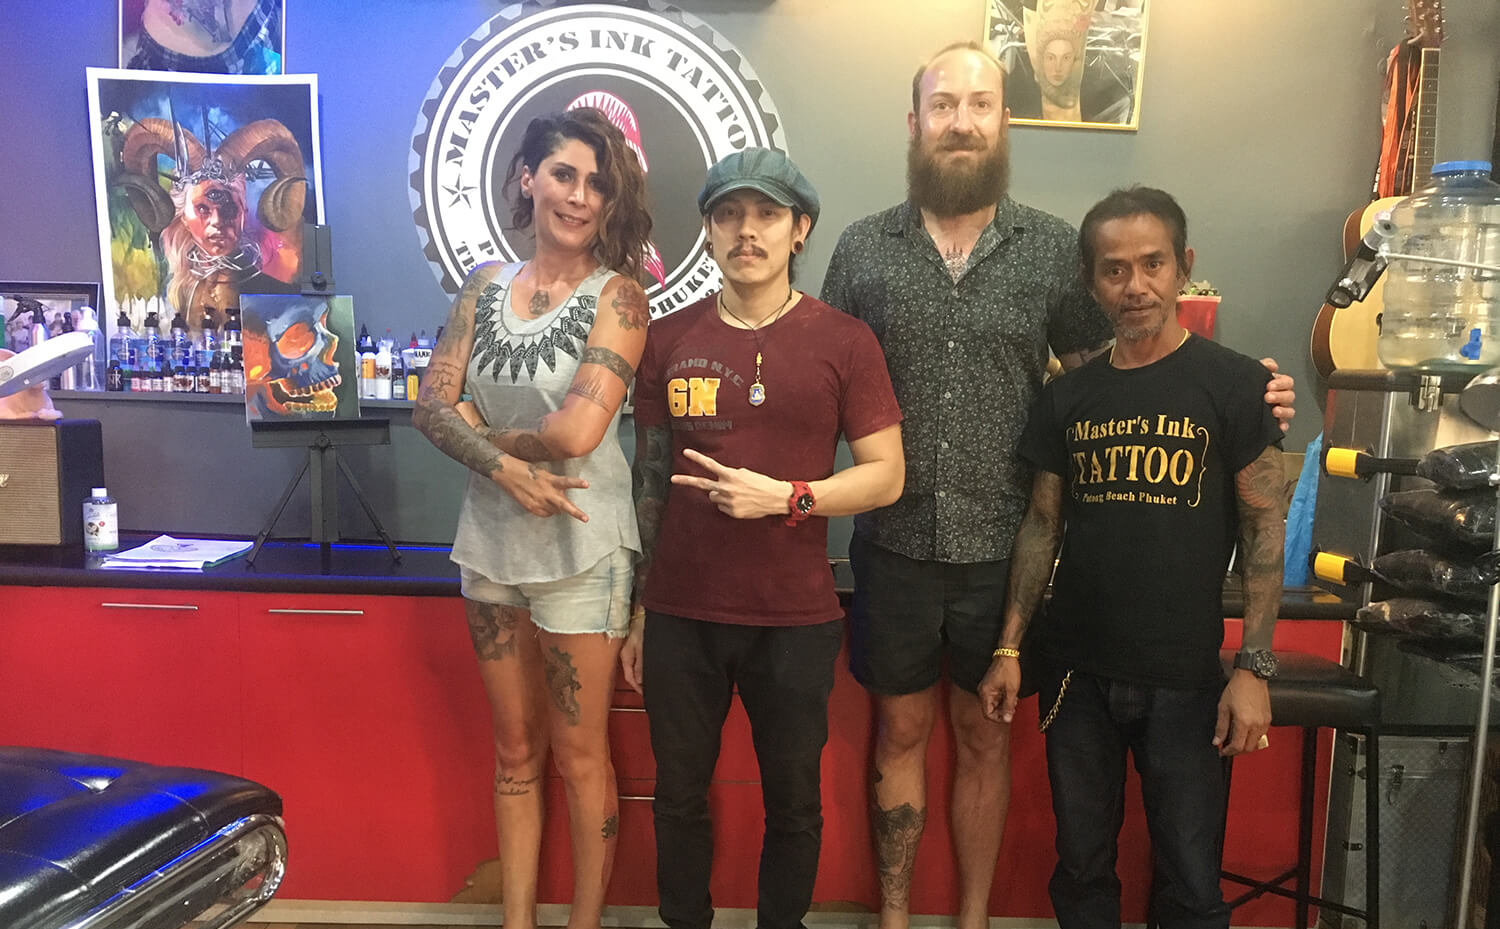 Master’s Ink Tattoo, Phuket, Thailand